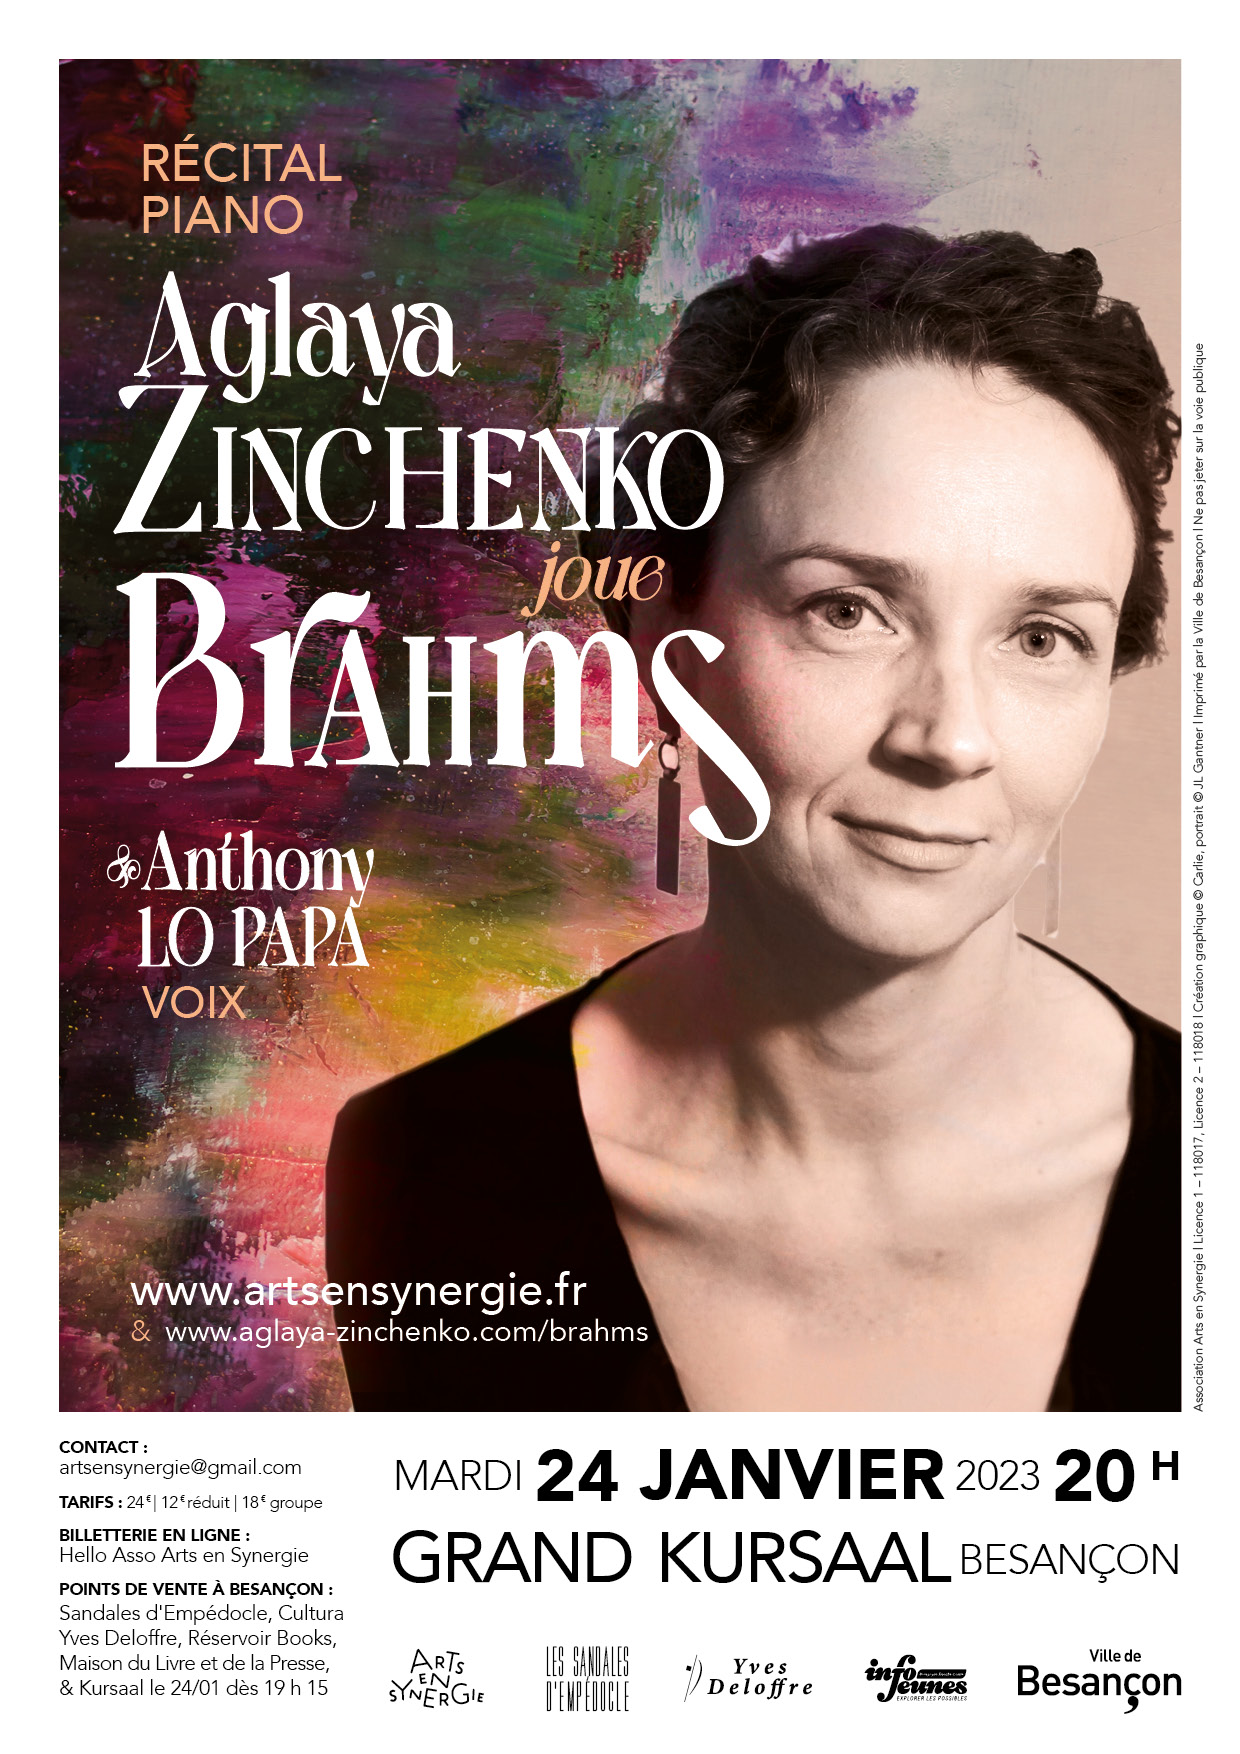 Aglaya ZINCHENKO joue Brahms le 24 janvier 2023